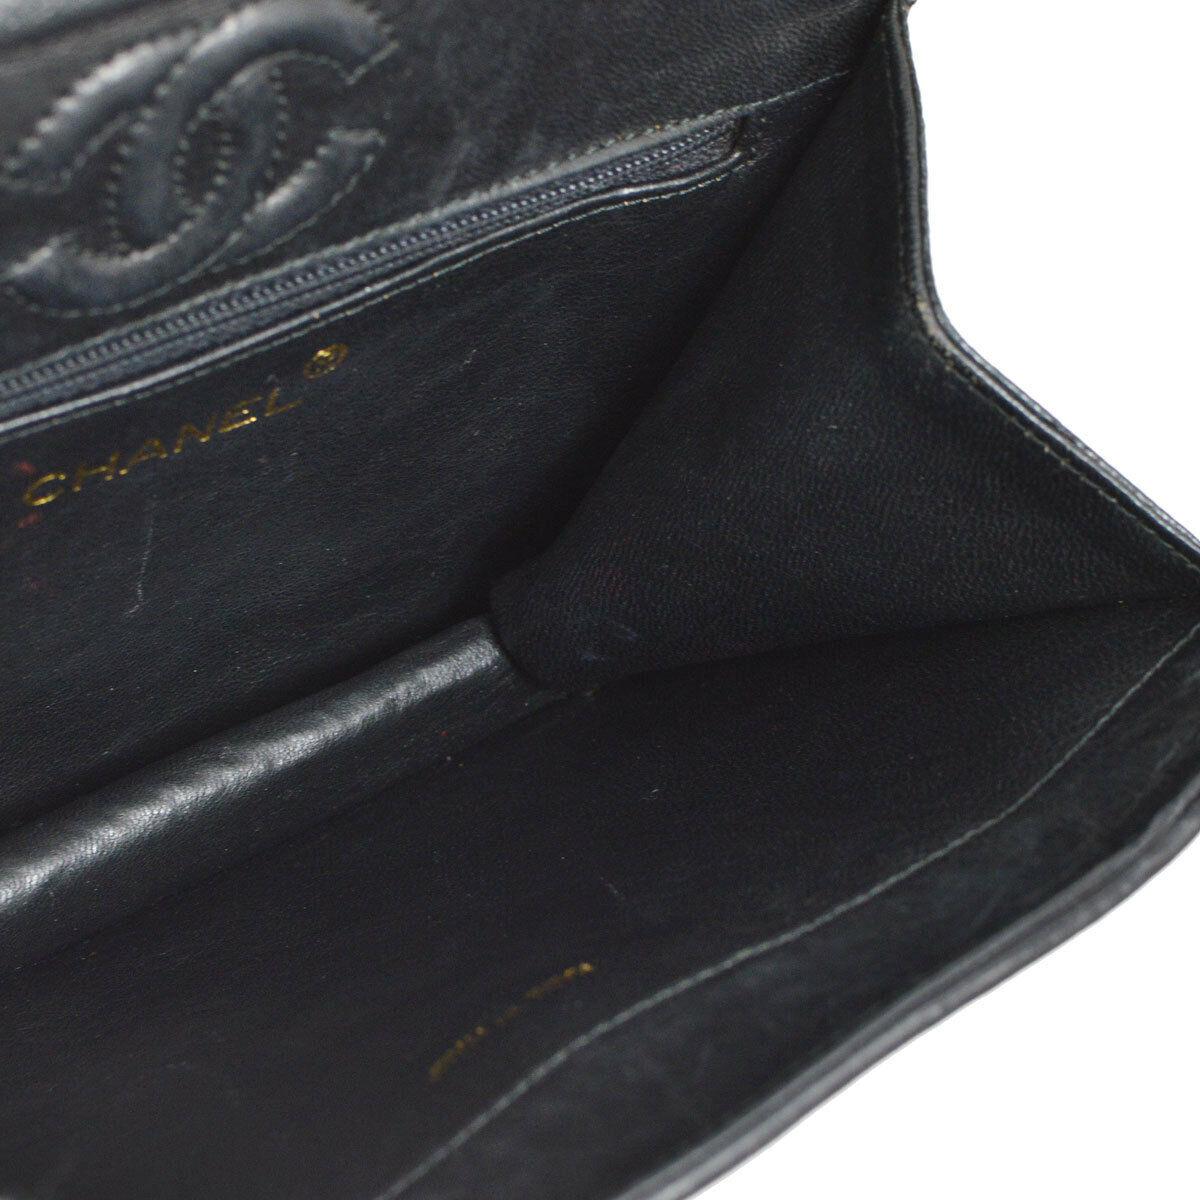 Chanel Black Lizard Exotic Skin Leather Small Evening Clutch Shoulder Flap Bag 1